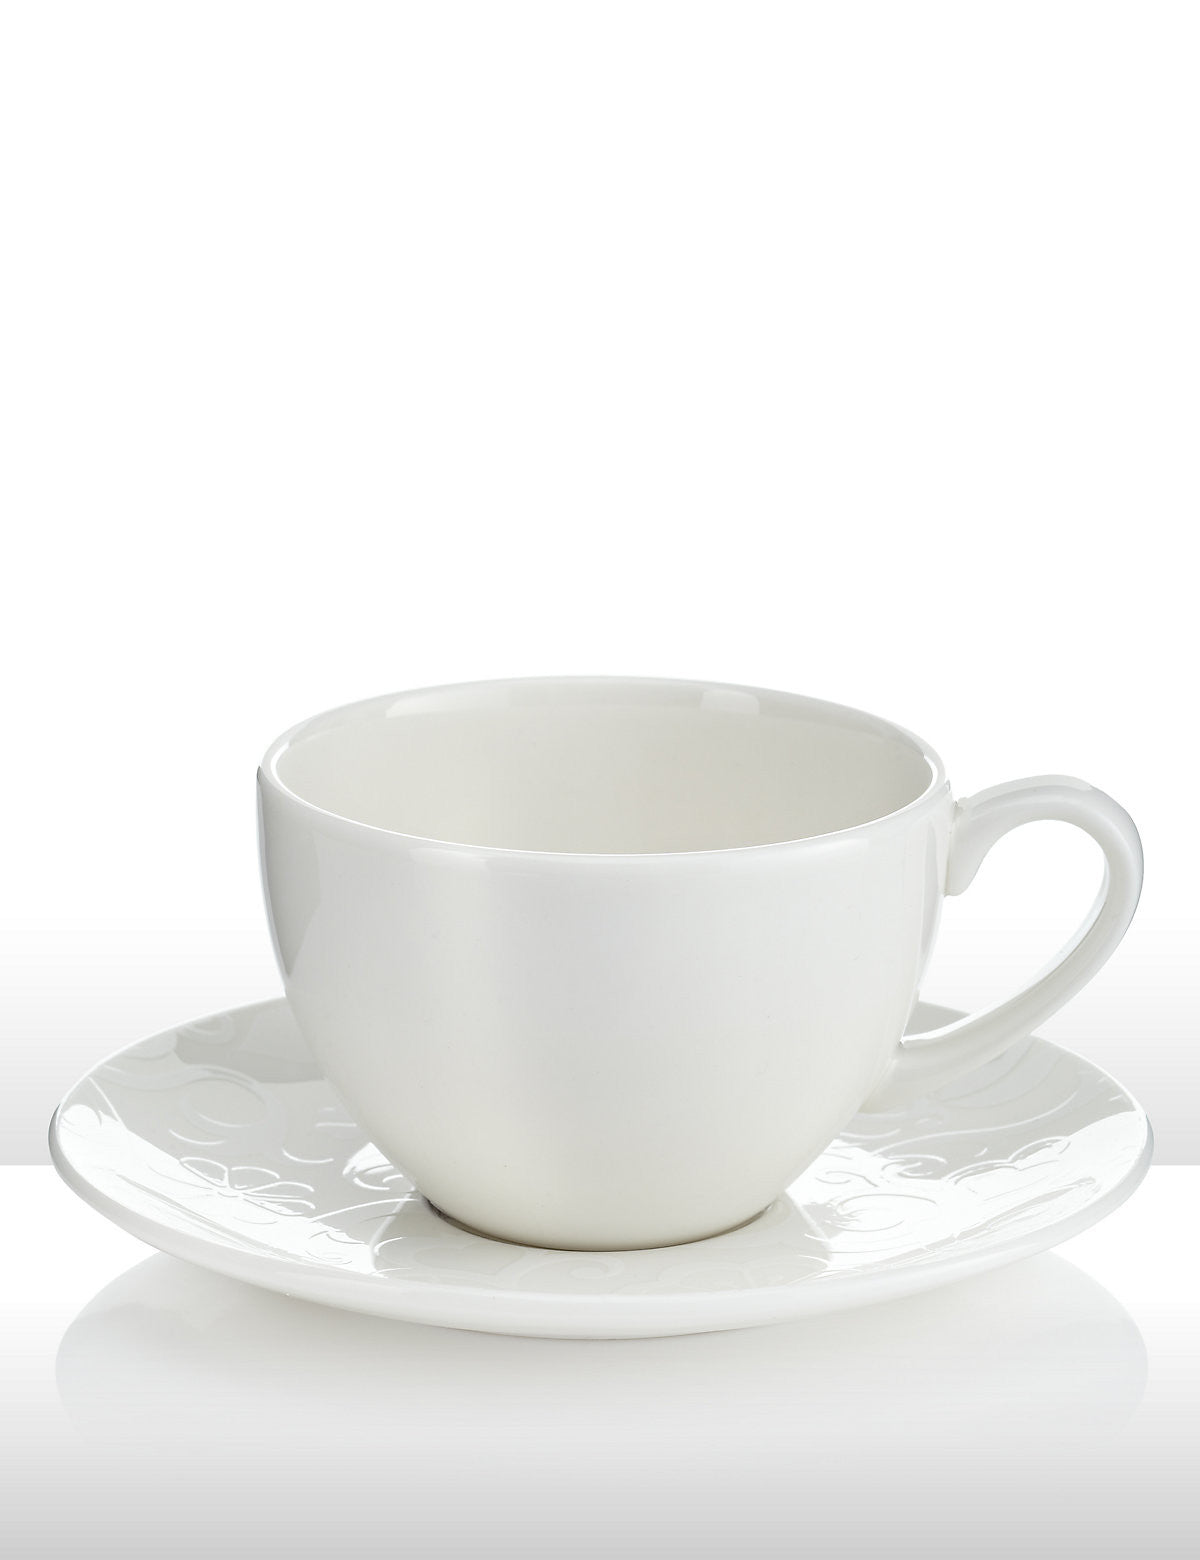 Latte Mug (8oz) - Set of 2 – AscasoUSA